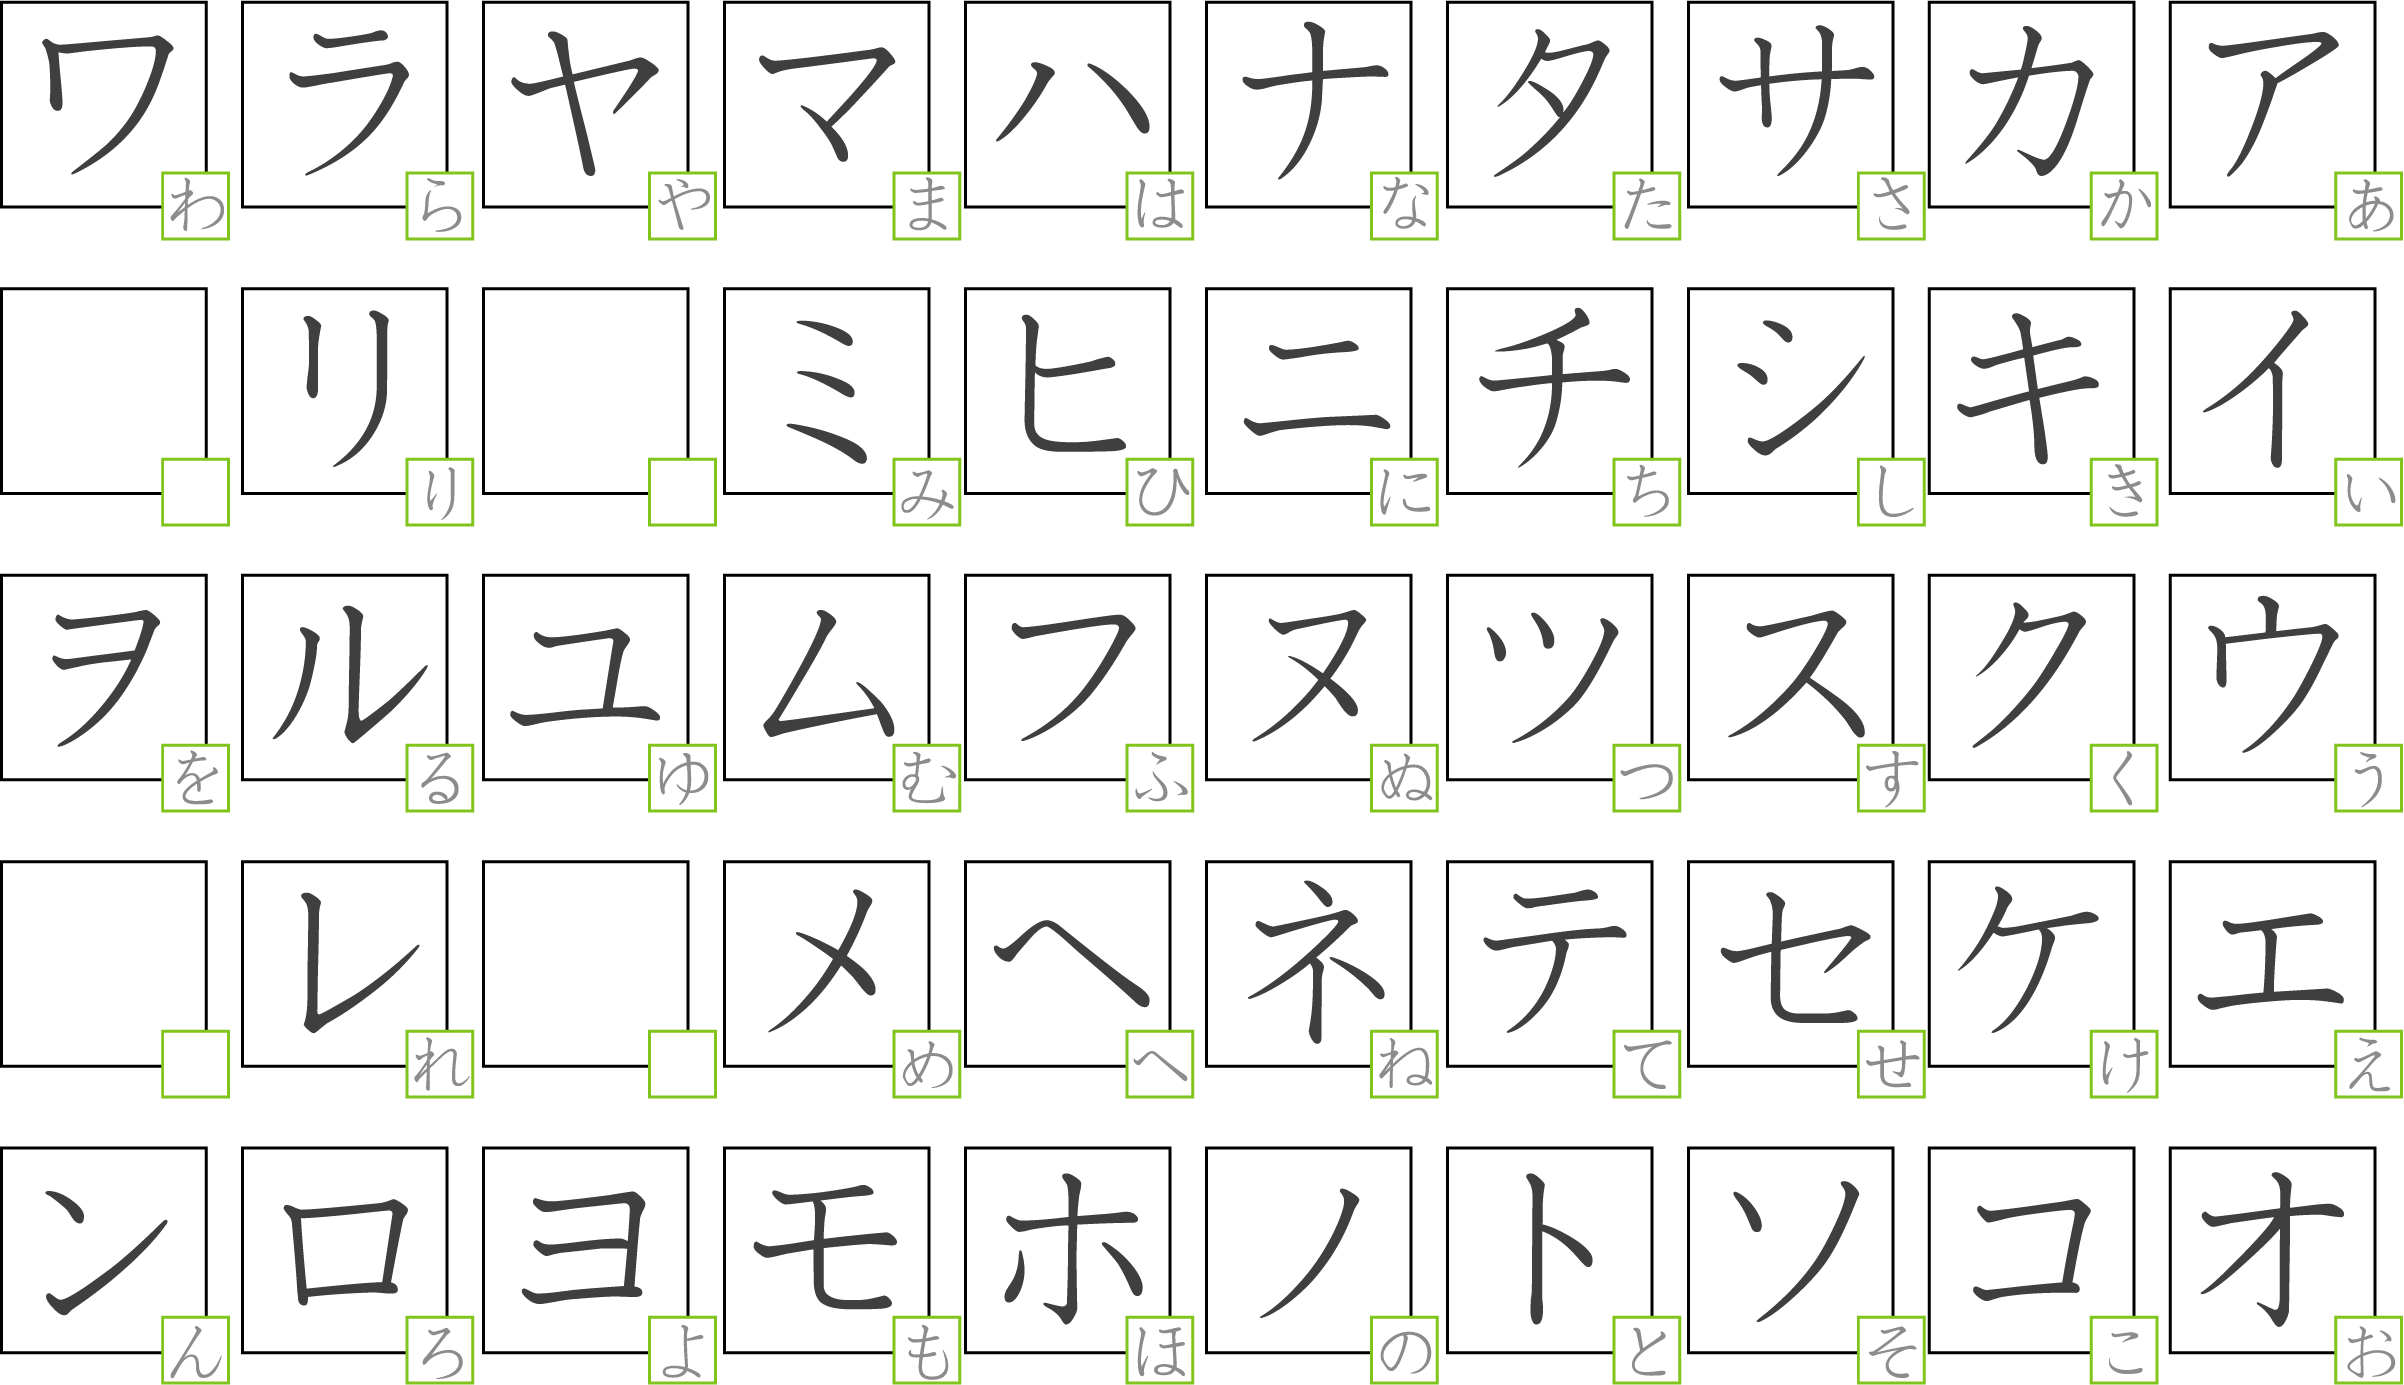 Katakana- Stroke order  にほんご Nihon go